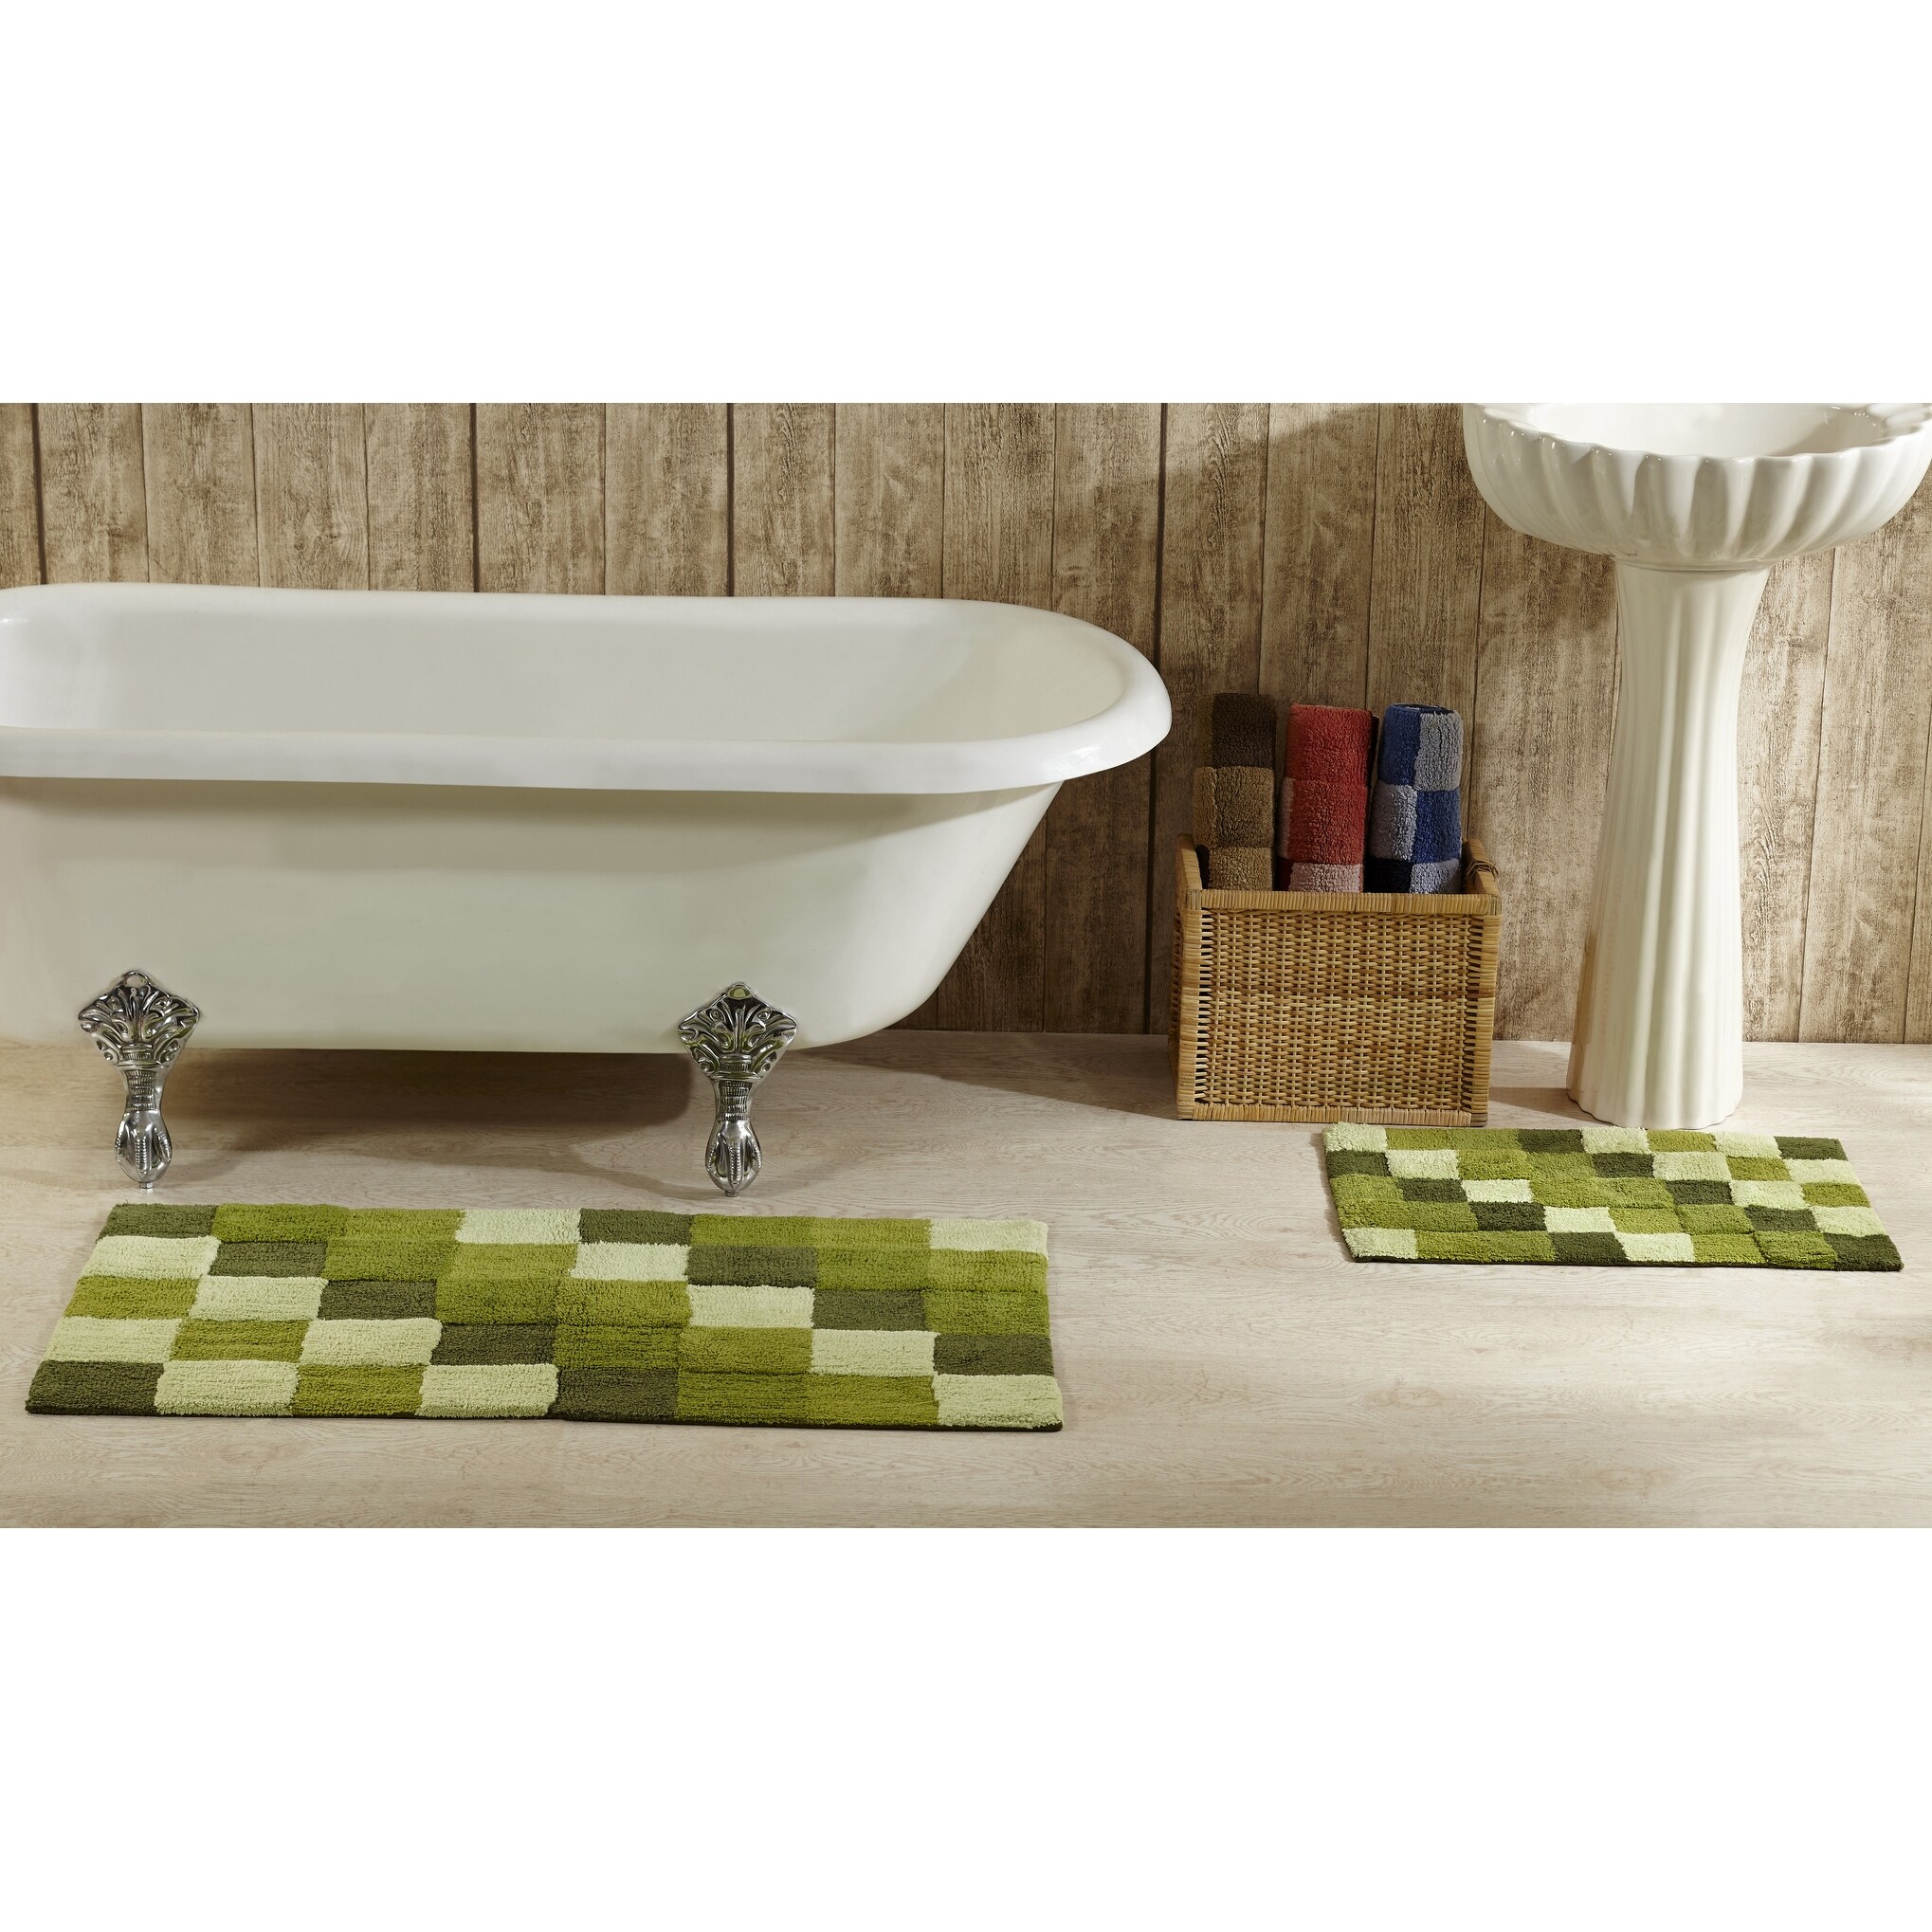 https://ak1.ostkcdn.com/images/products/is/images/direct/4d271a6fc6c1731d48db1a0eec061d43da23d50e/Better-Trends-Tiles-Collection-2-Piece-Set-100%25-Cotton-Tufted-Bath-Mat-Rug-Set.jpg